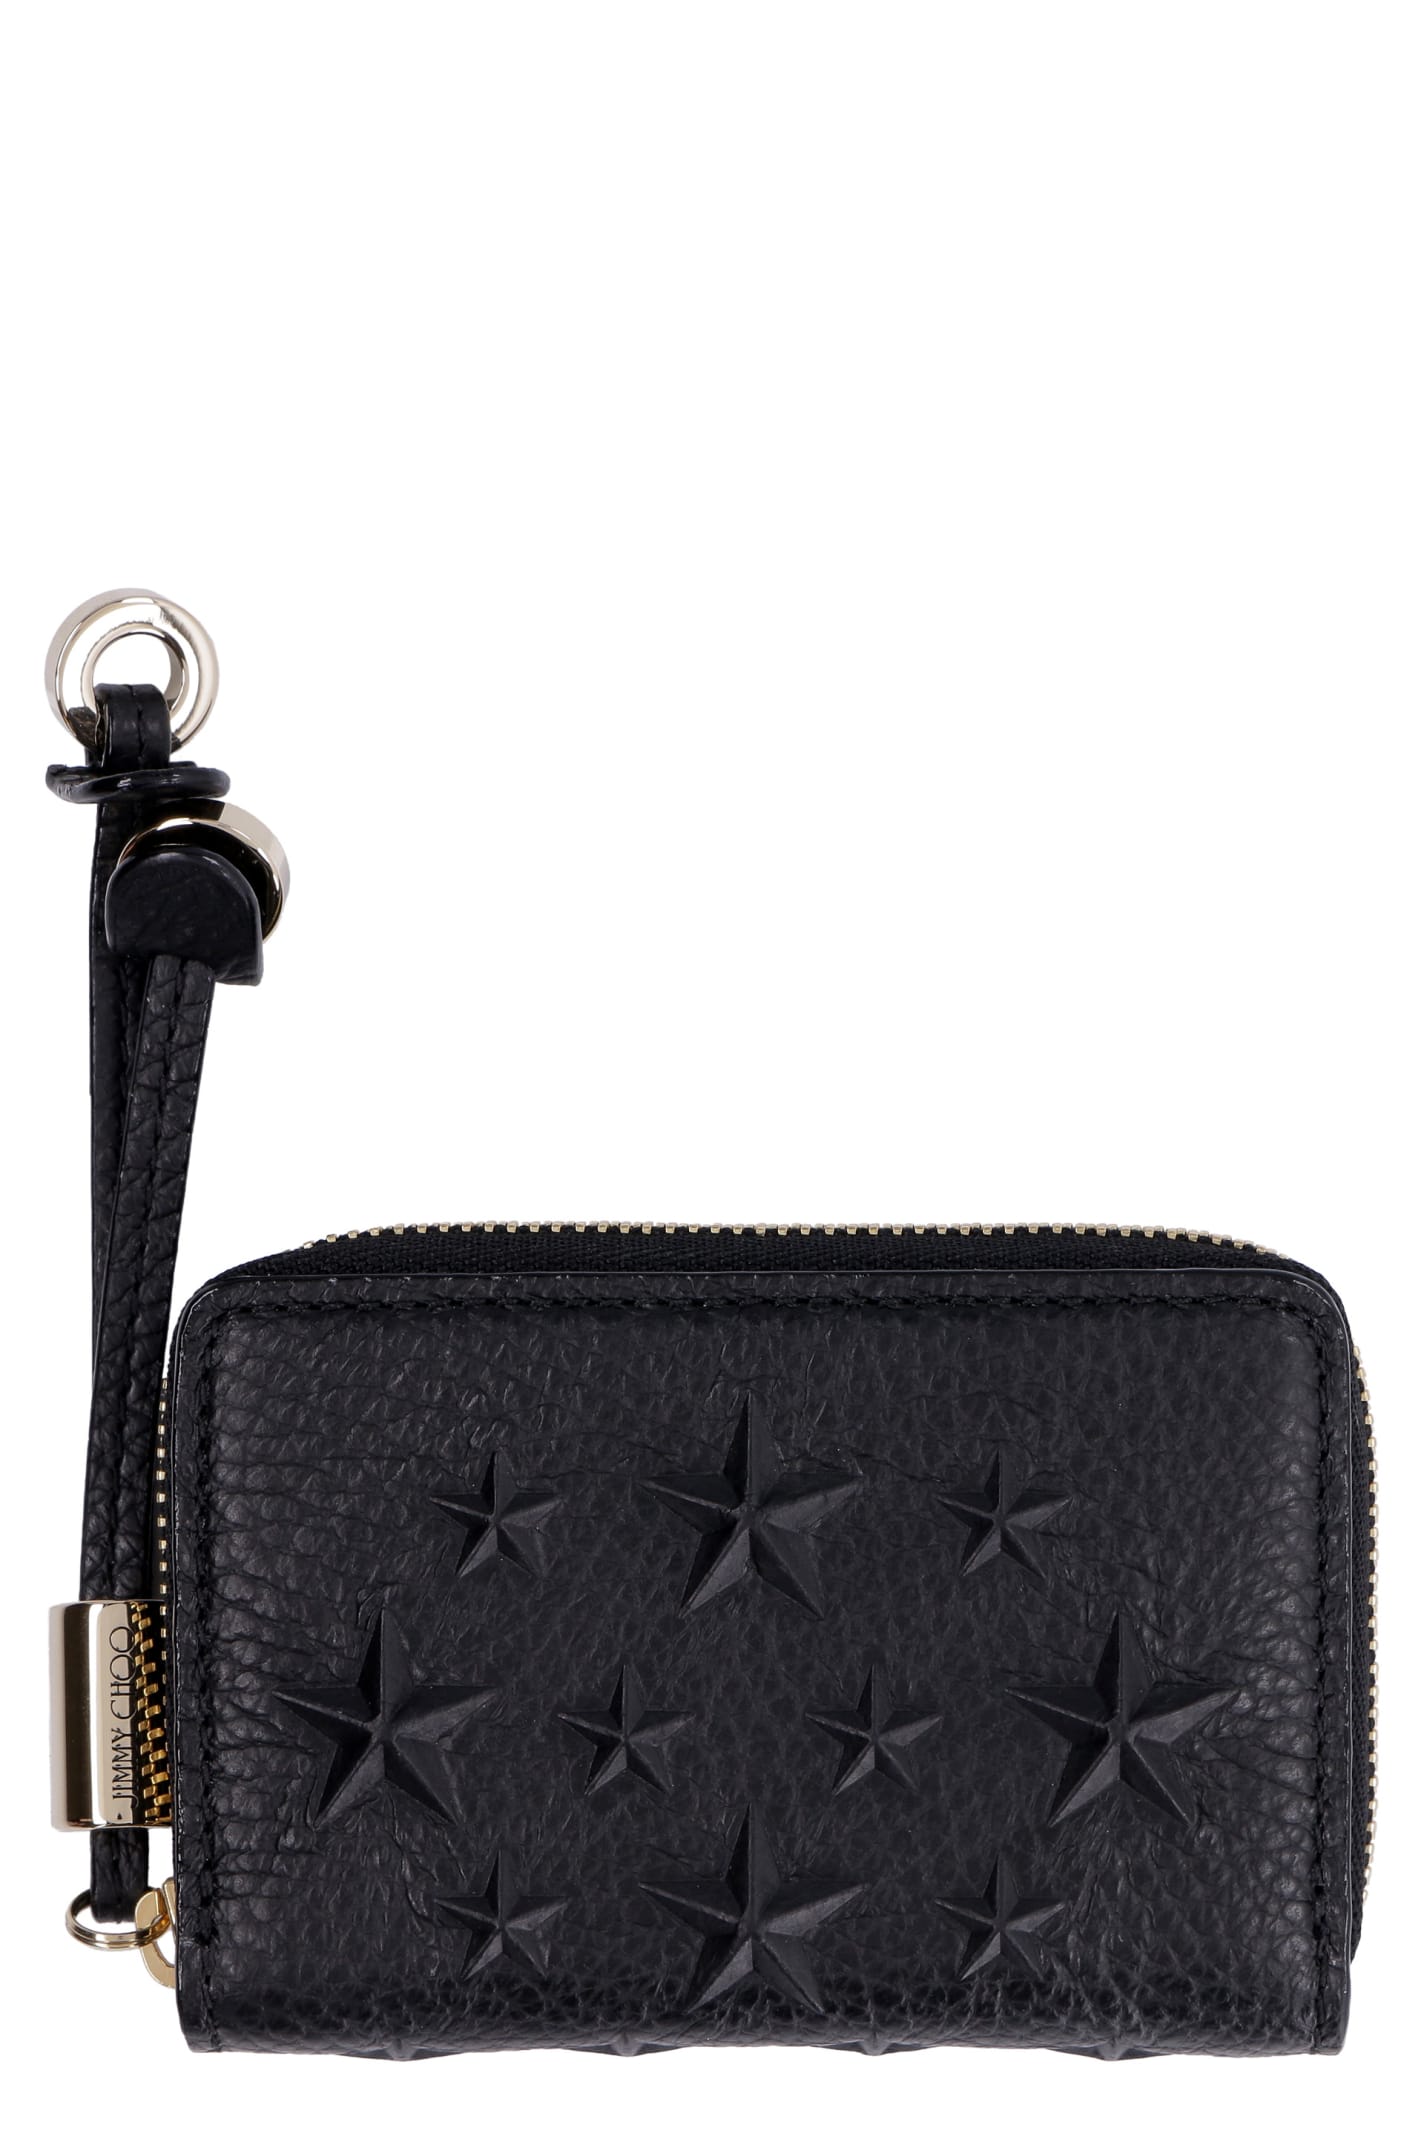 Jimmy Choo Nellie Leather Zip Around Wallet In Black